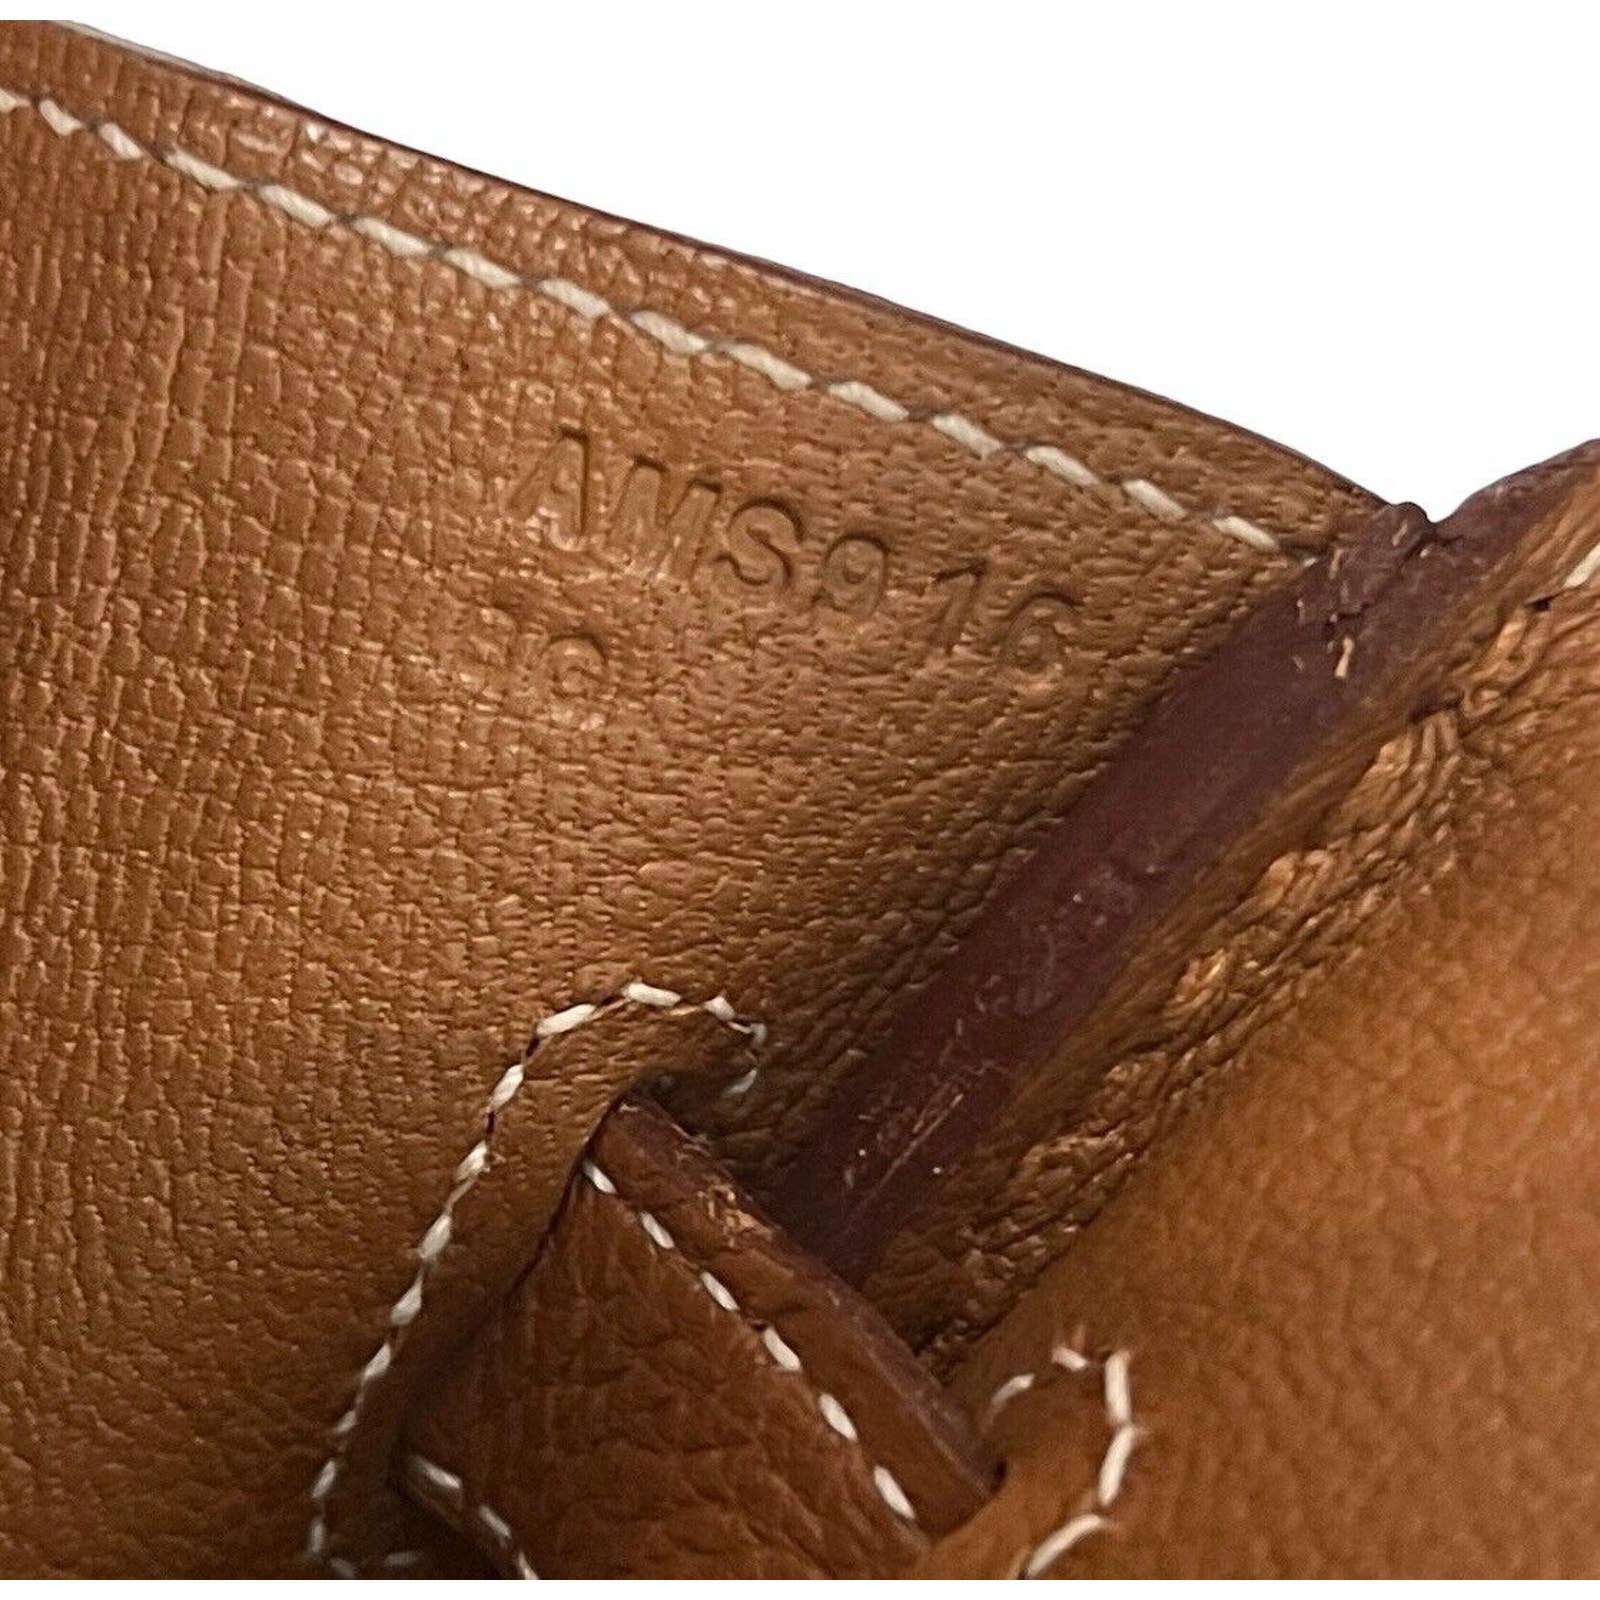 Hermès Birkin 30 Gold Tan Camel Togo Leather Gold Hardware Handbag